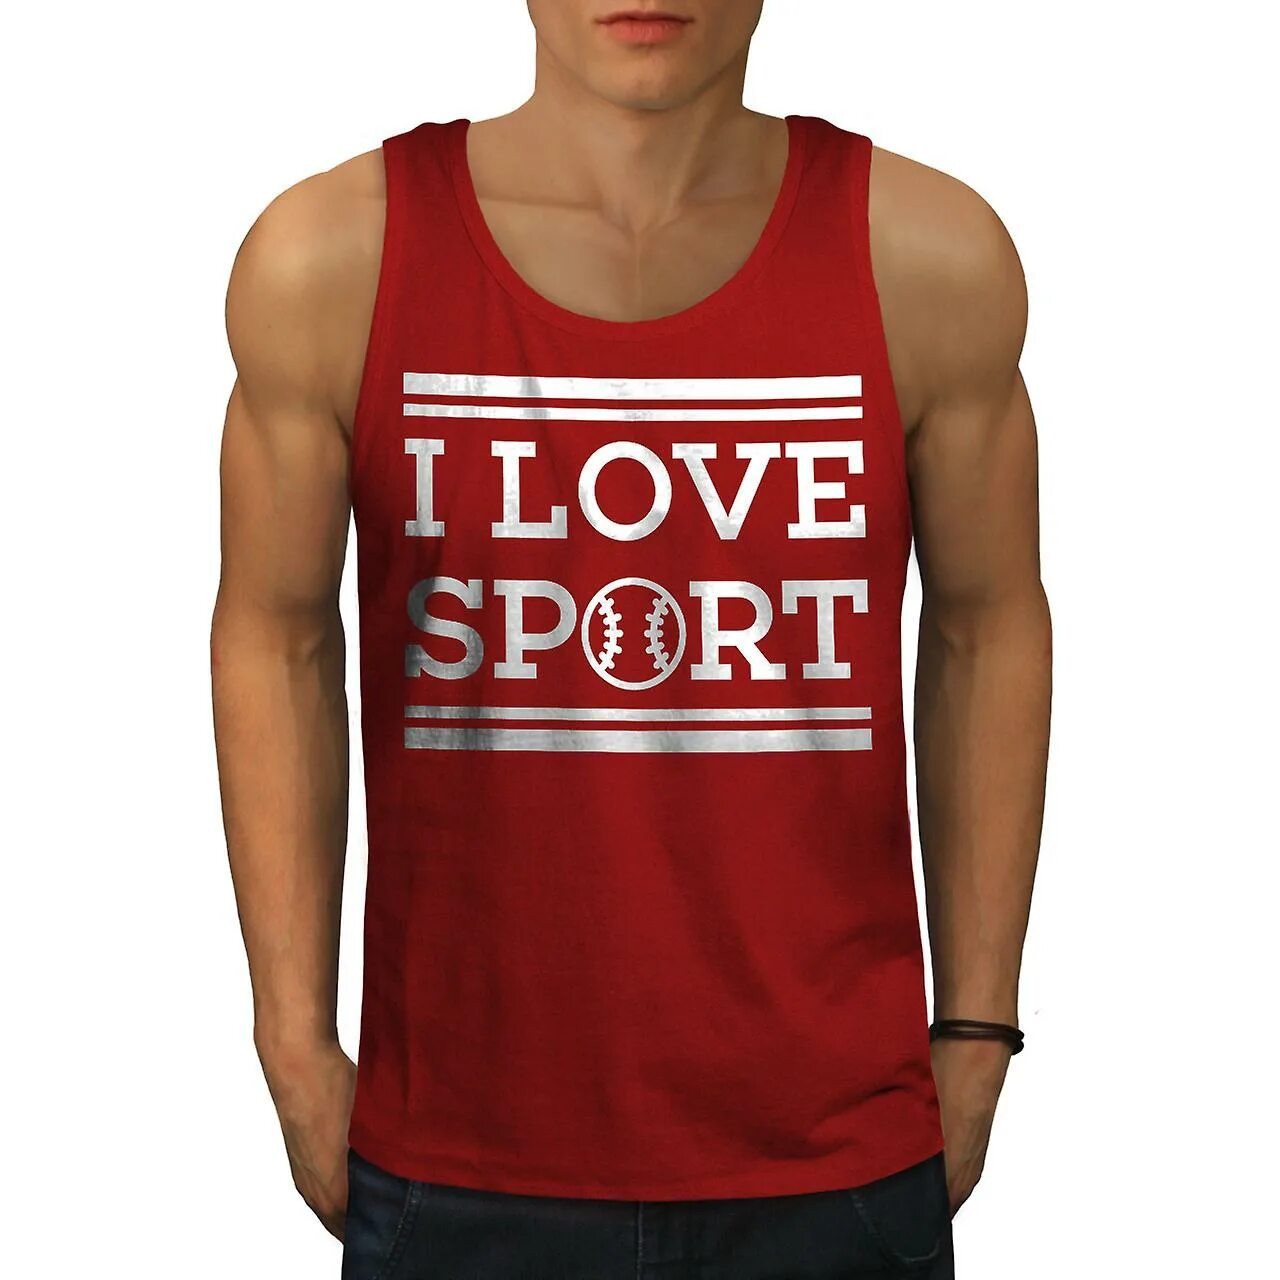 He love sport. I Love Sport. Sport one Love. I Love Sport картинки.